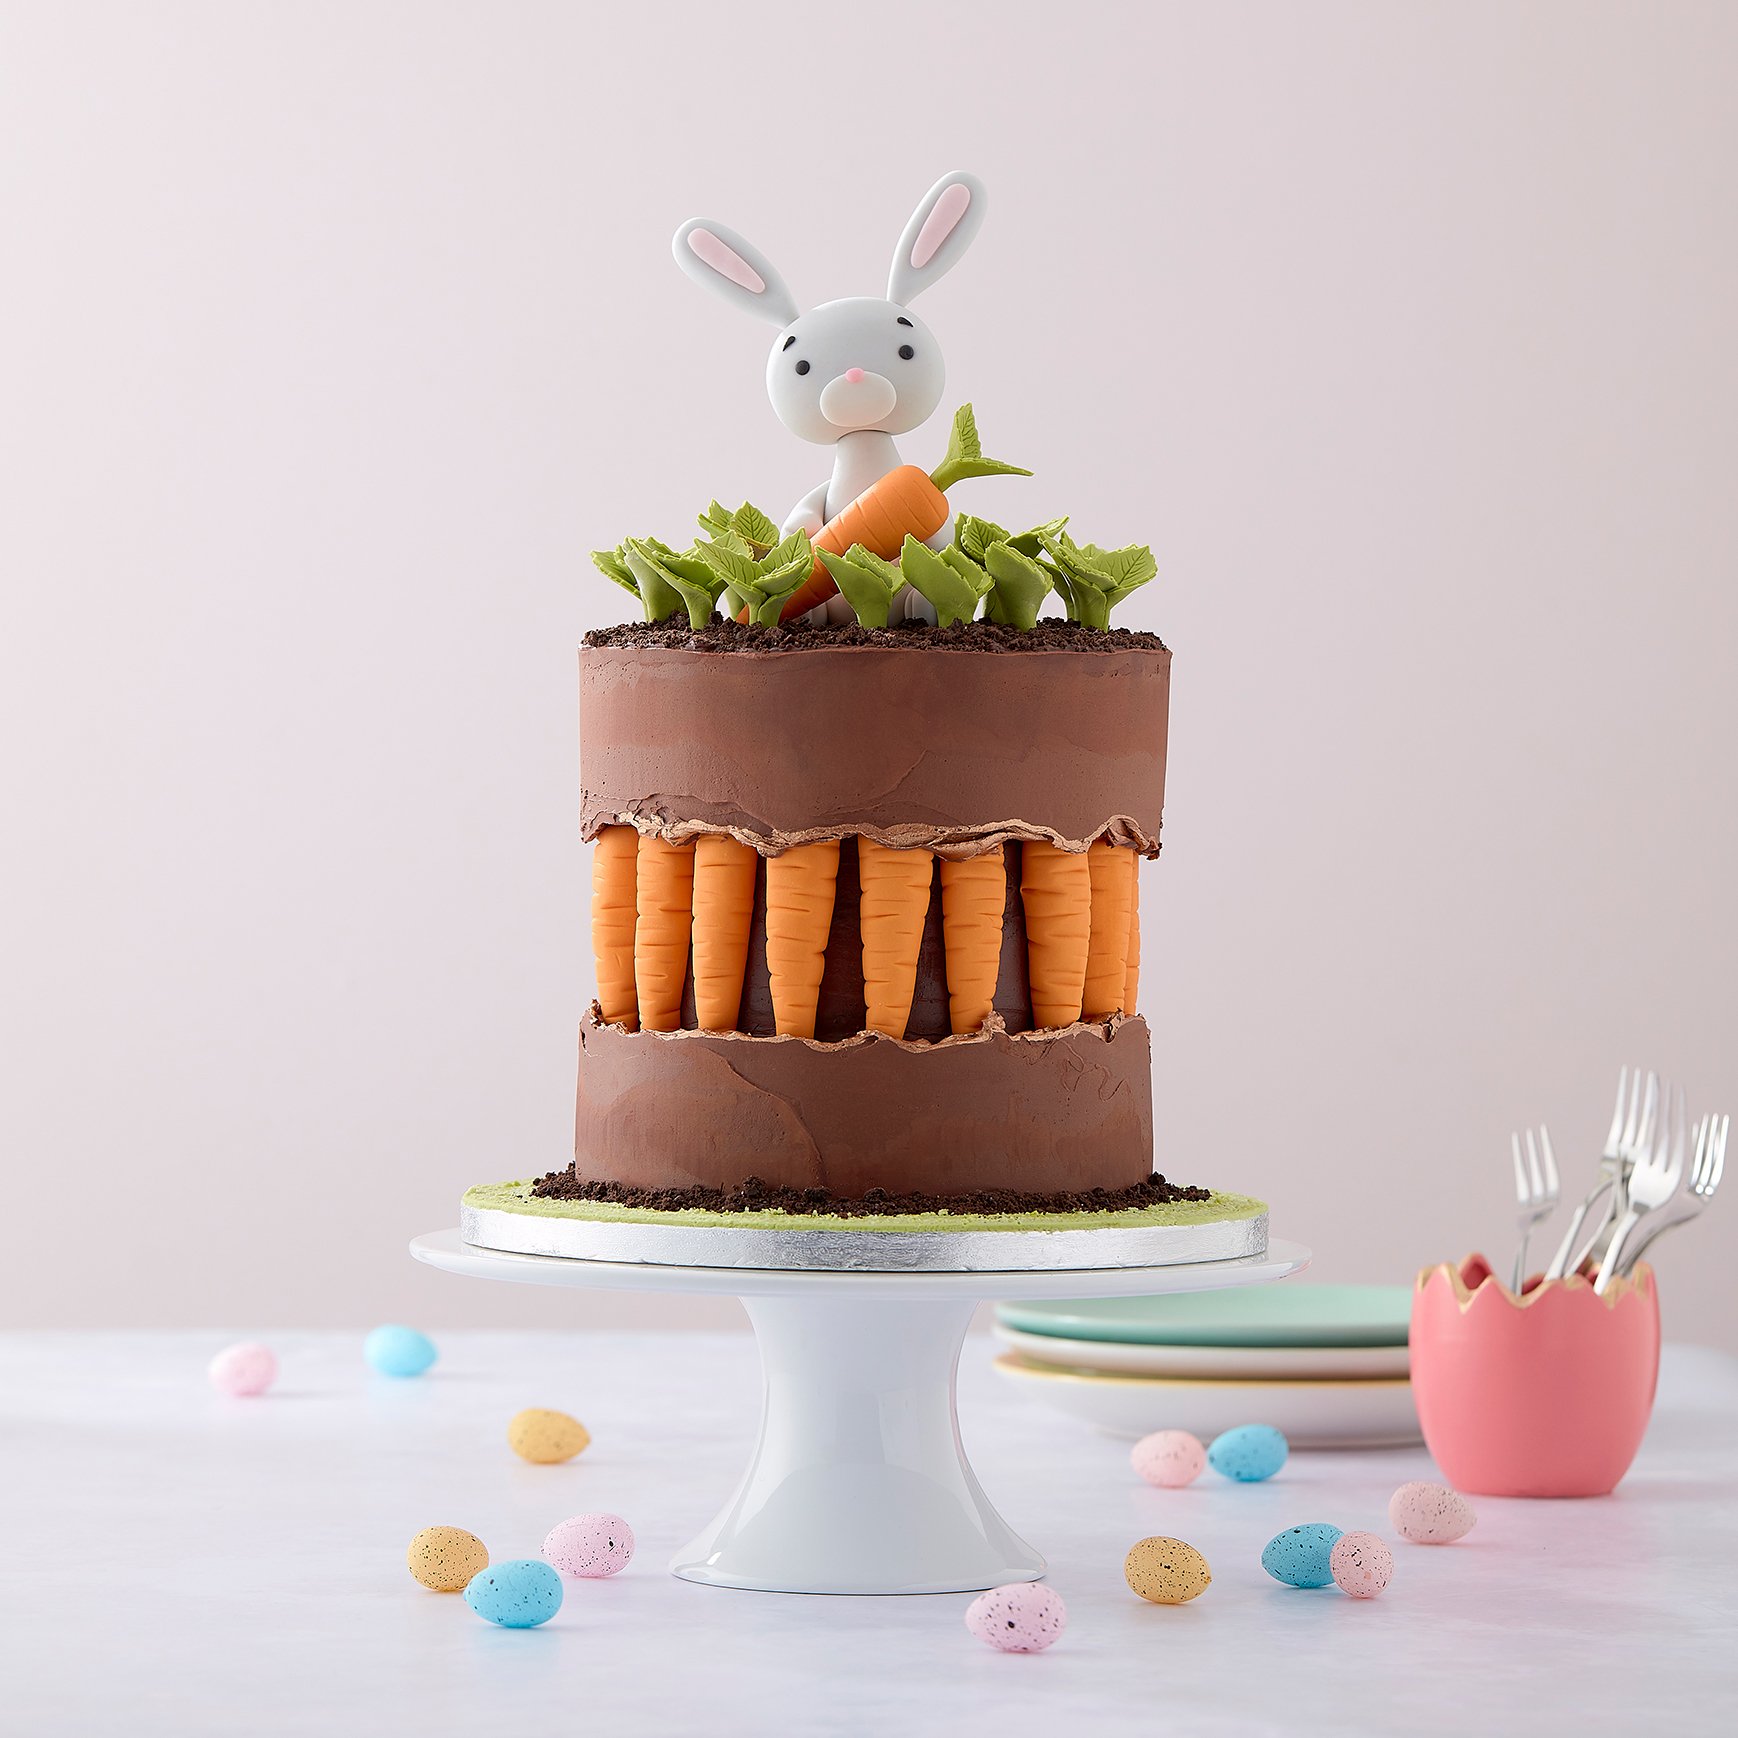 Carrot walnut cake | London Cakes & Bakes